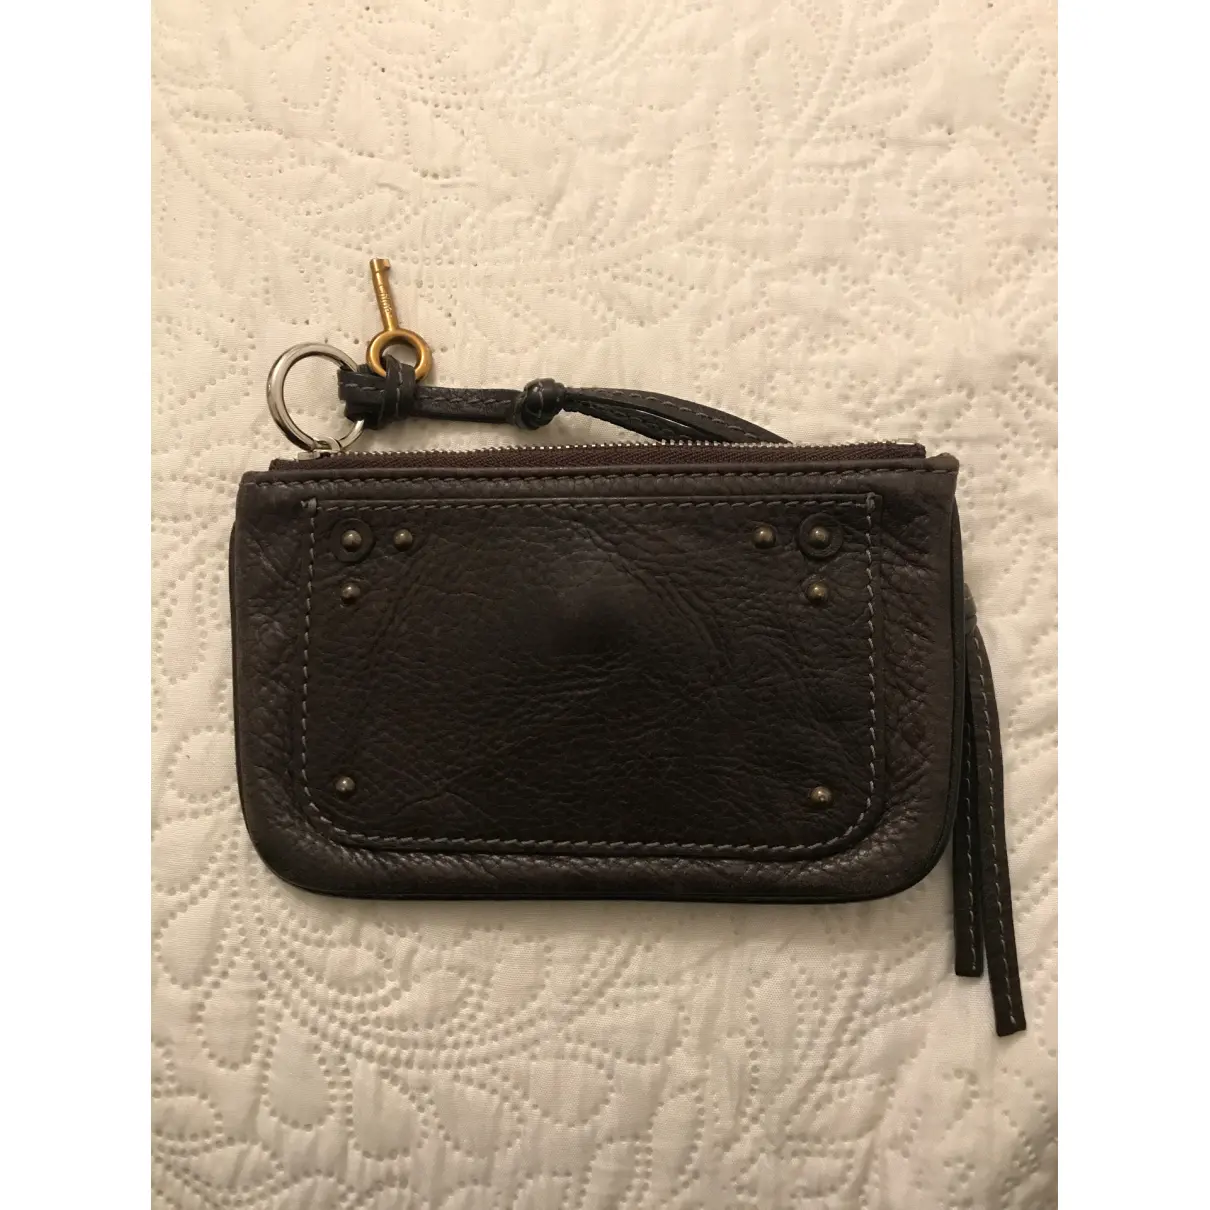 Buy Chloé Leather purse online